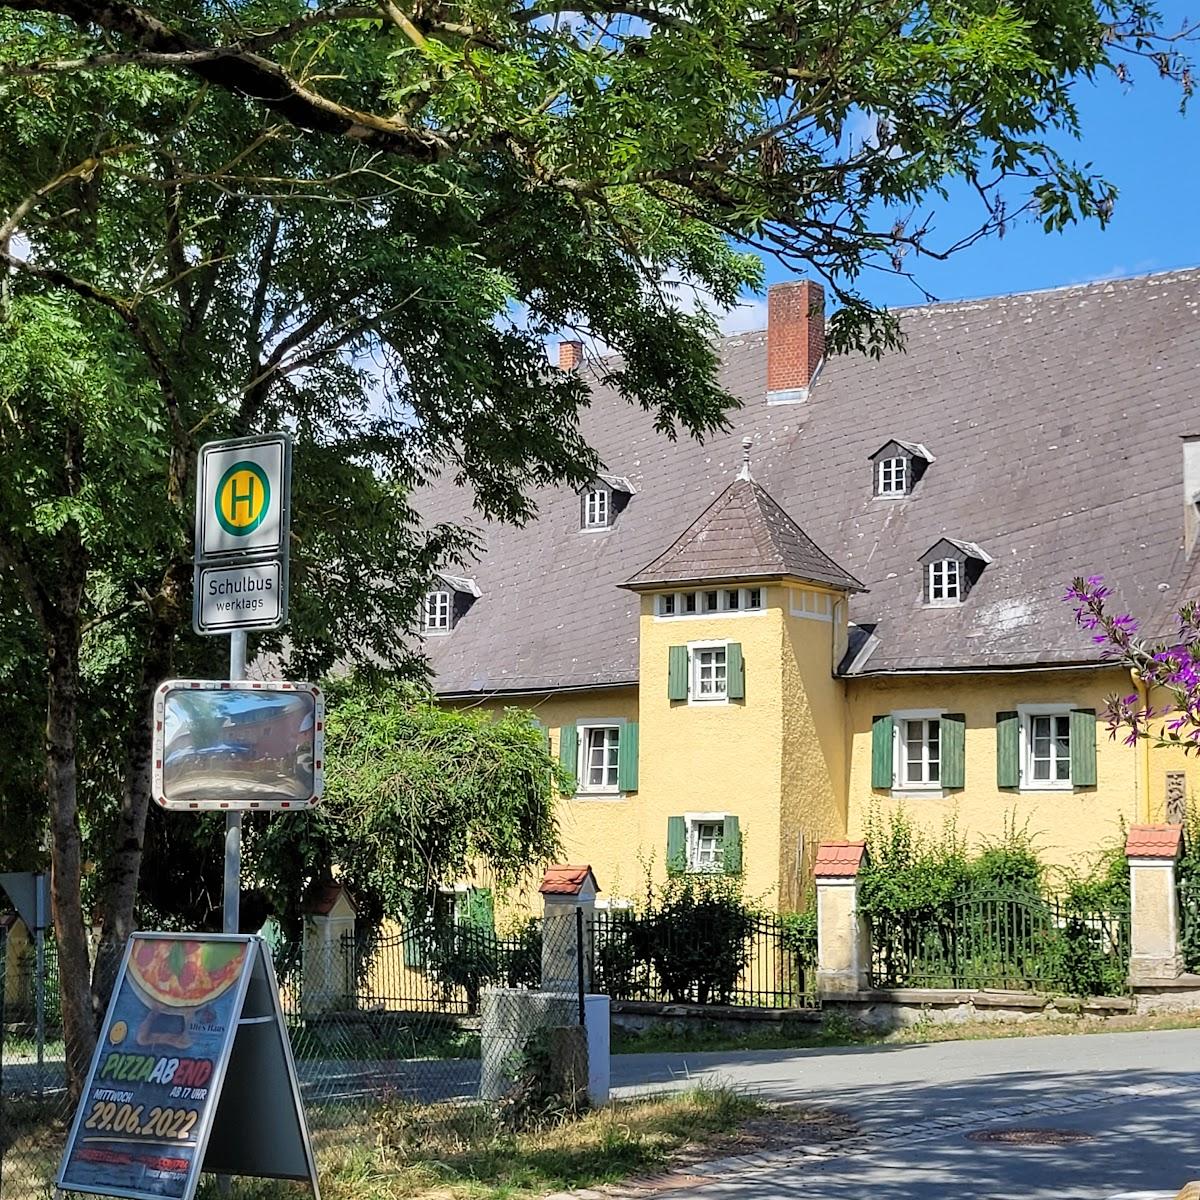 Restaurant "Altes Haus" in Gattendorf